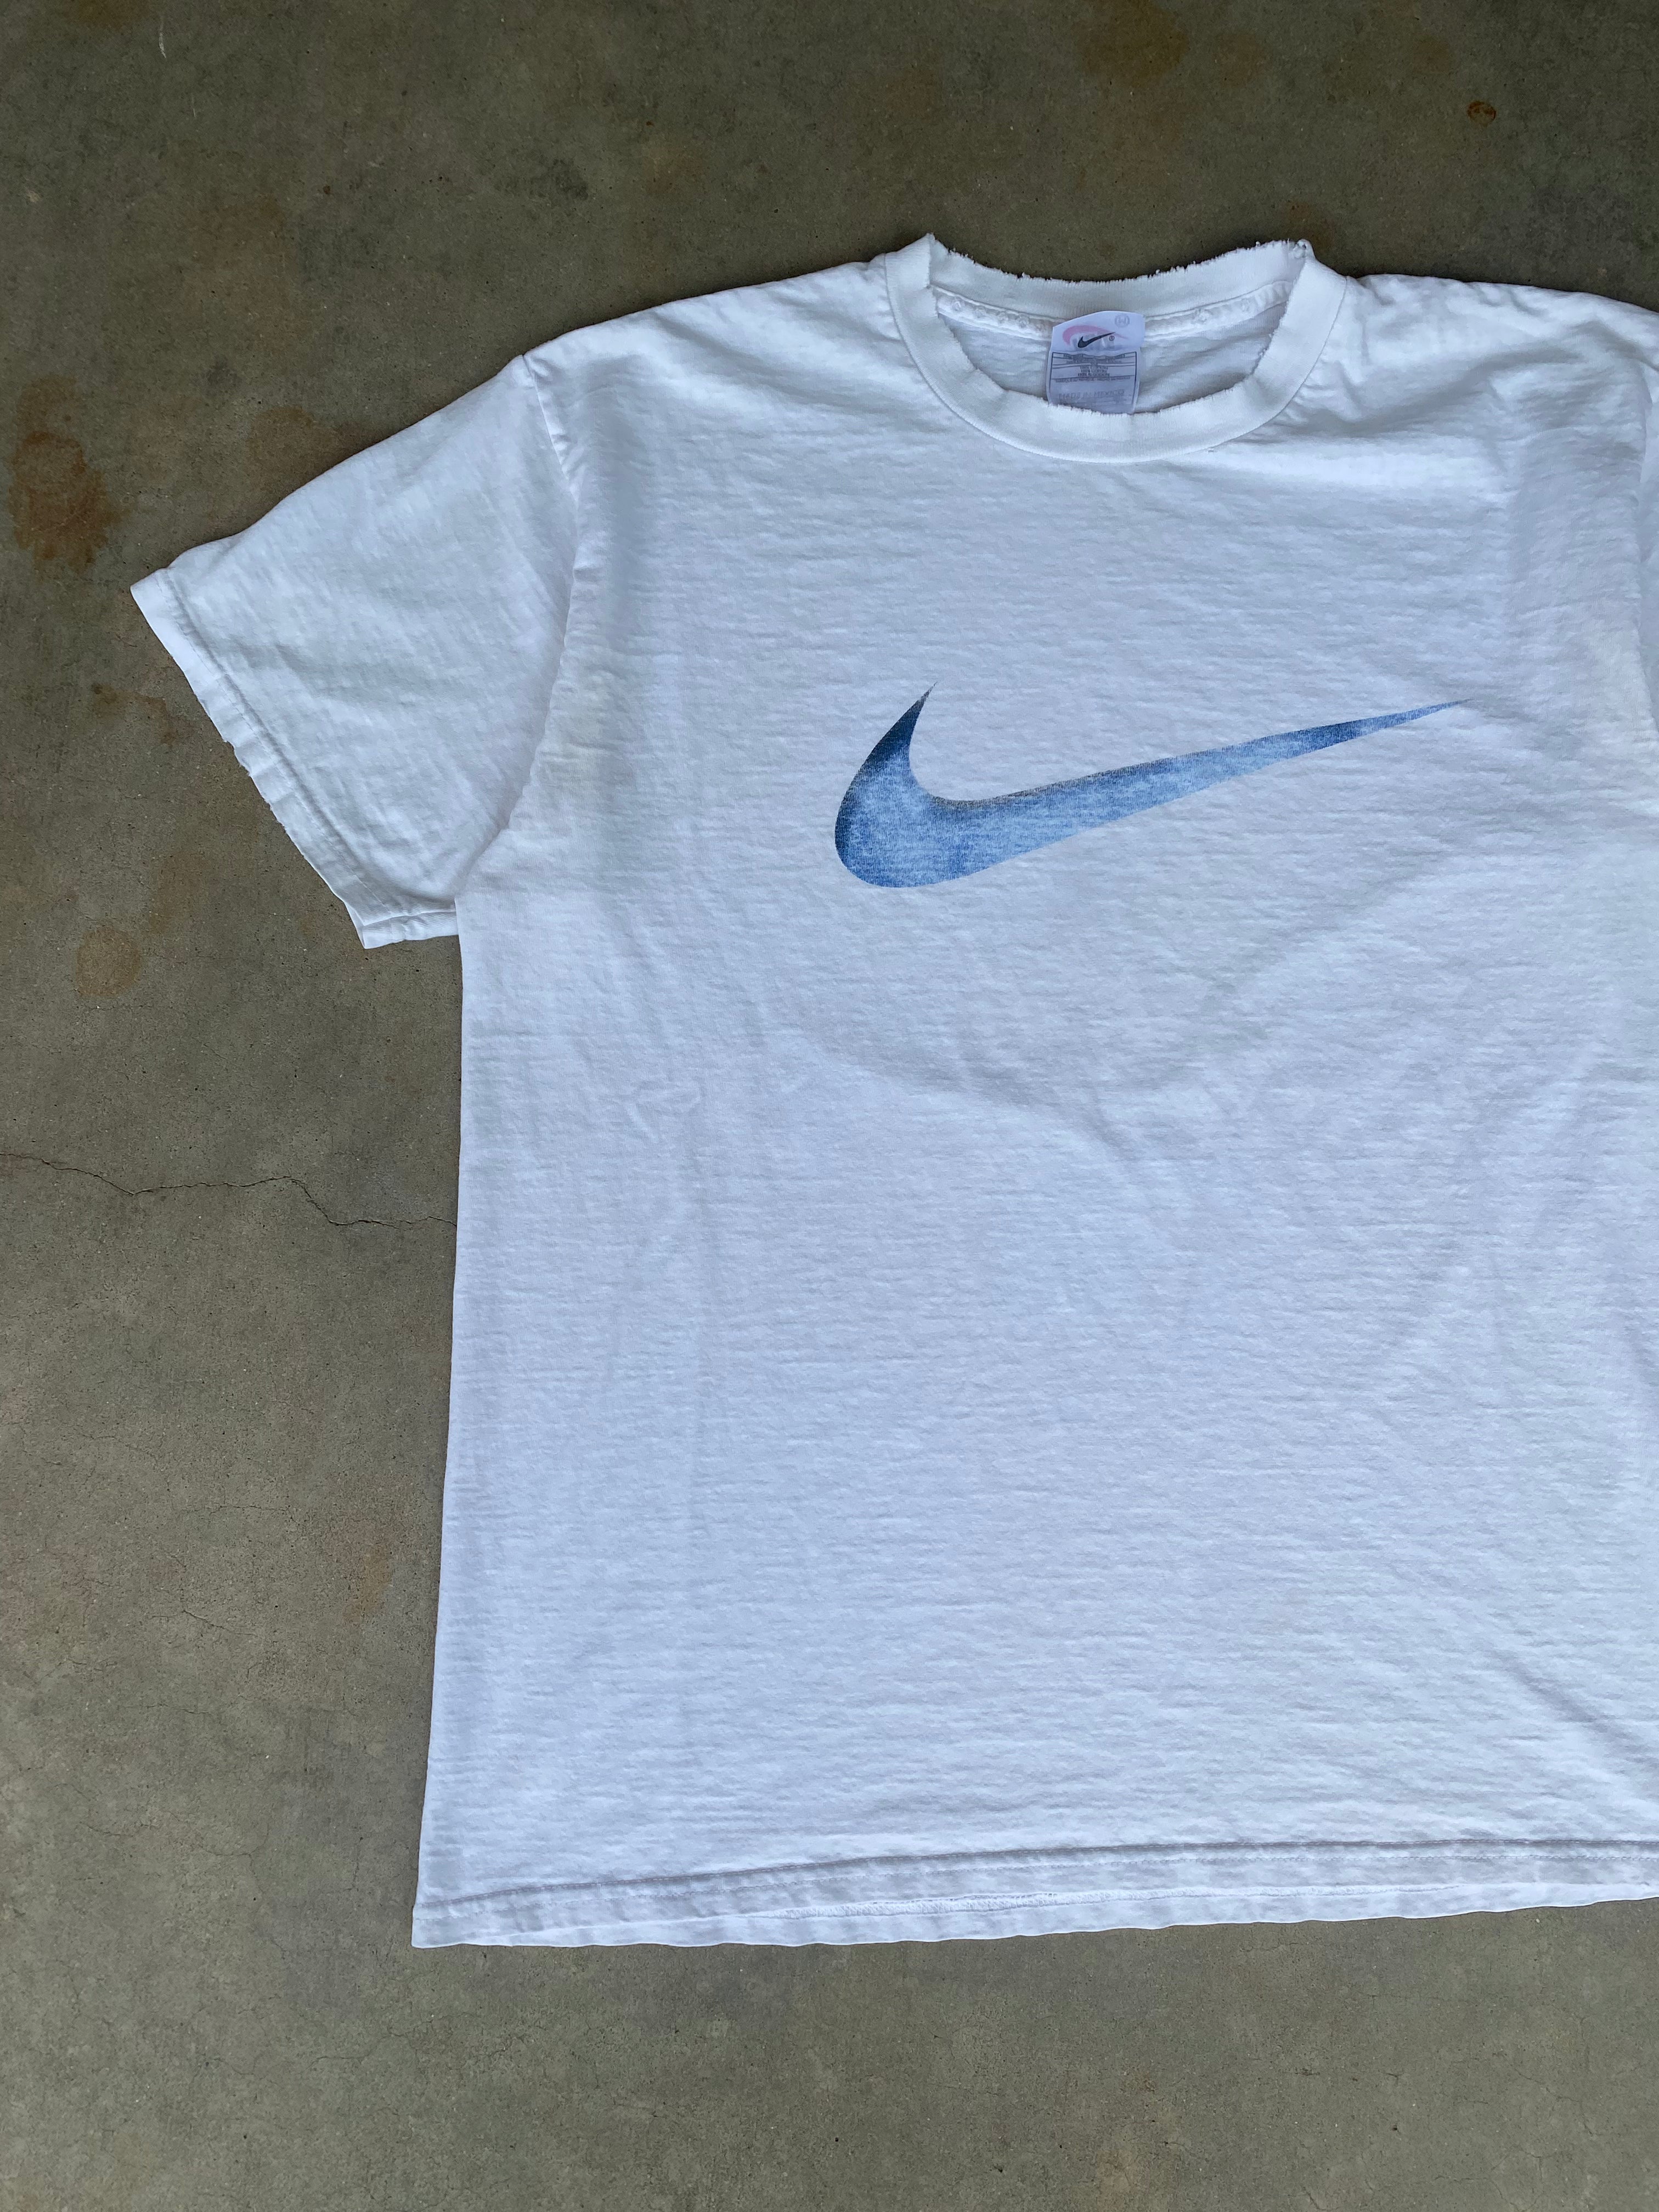 1990s Distressed Nike T-Shirt (M)